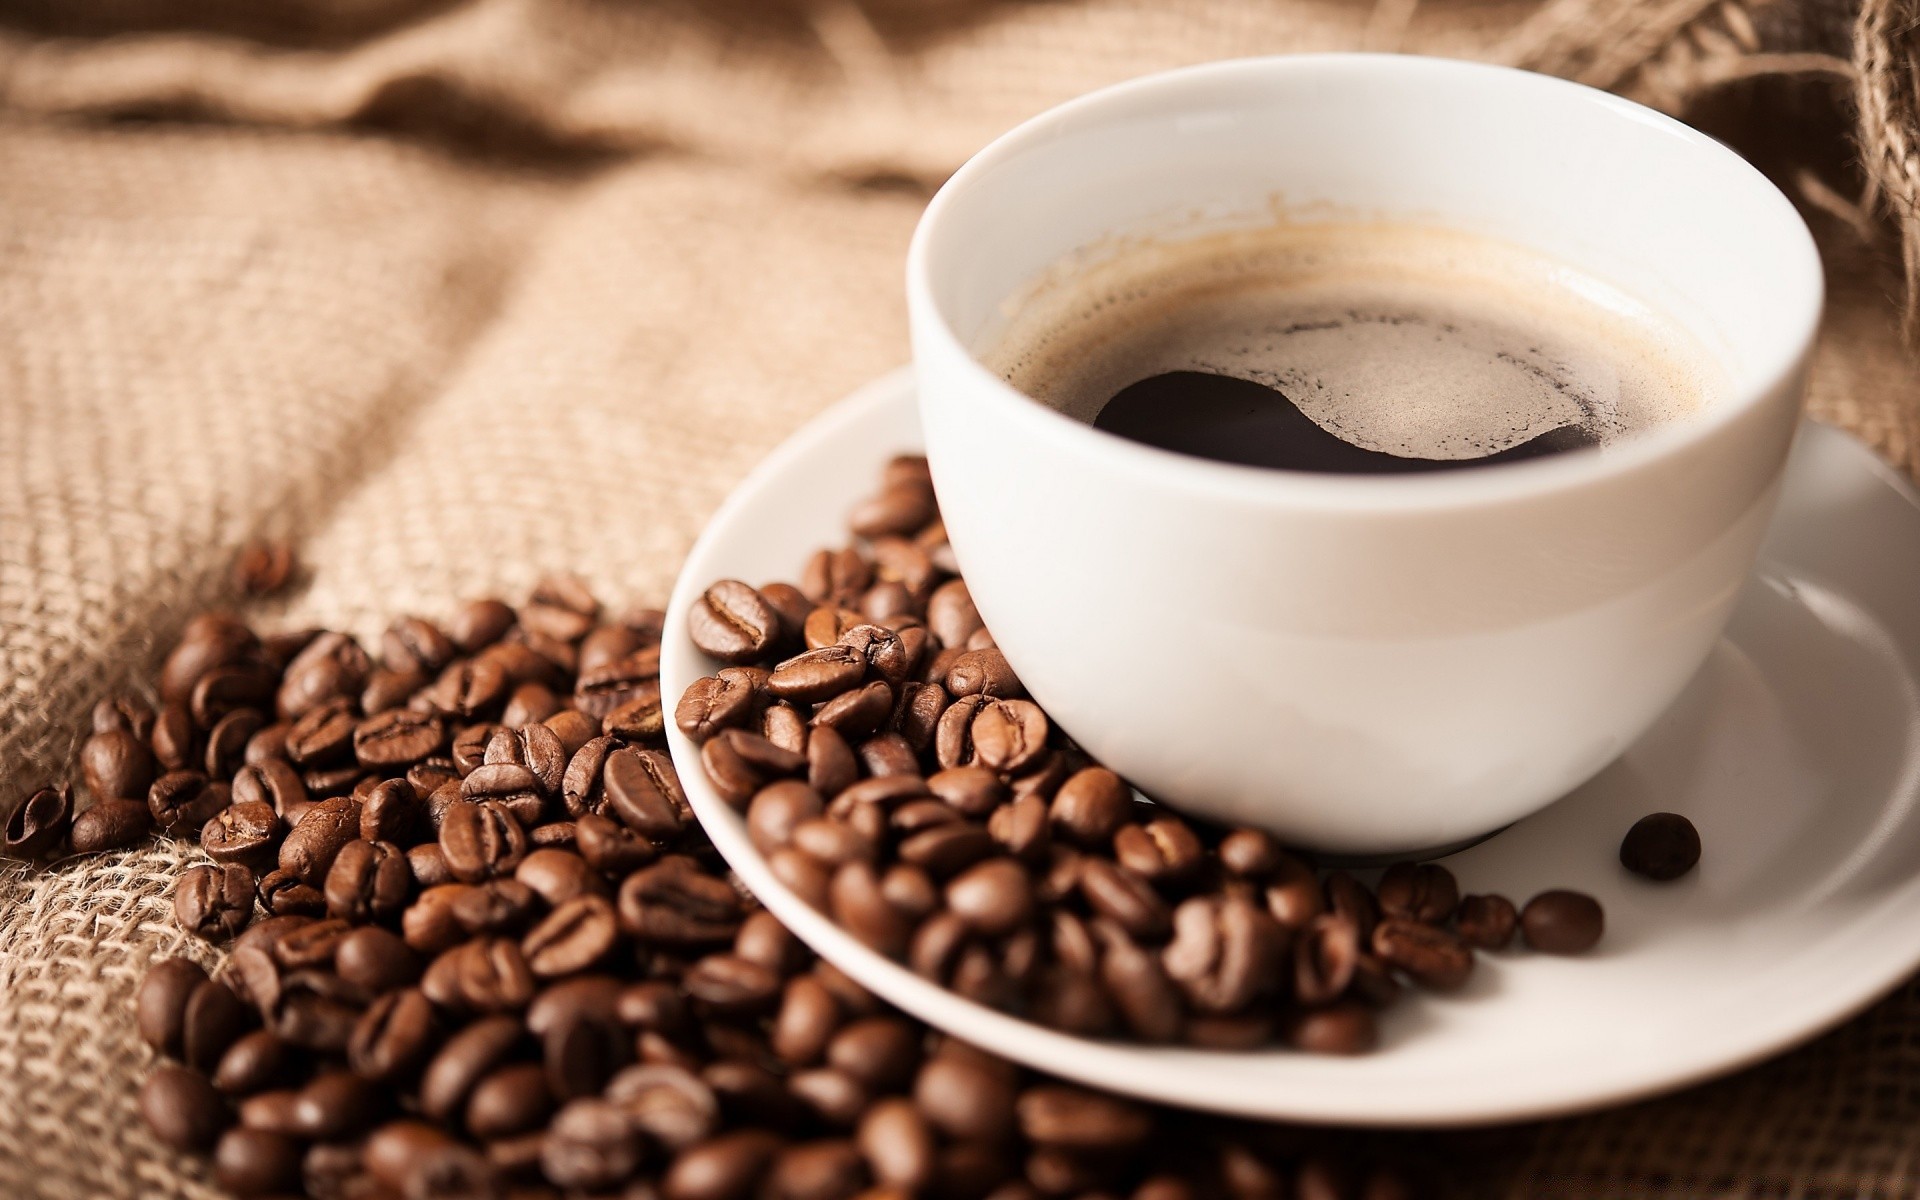 food & drink coffee caffeine espresso dawn bean drink dark perfume cup breakfast cappuccino mocha hot mug food cereal taste aromatic saucer crop